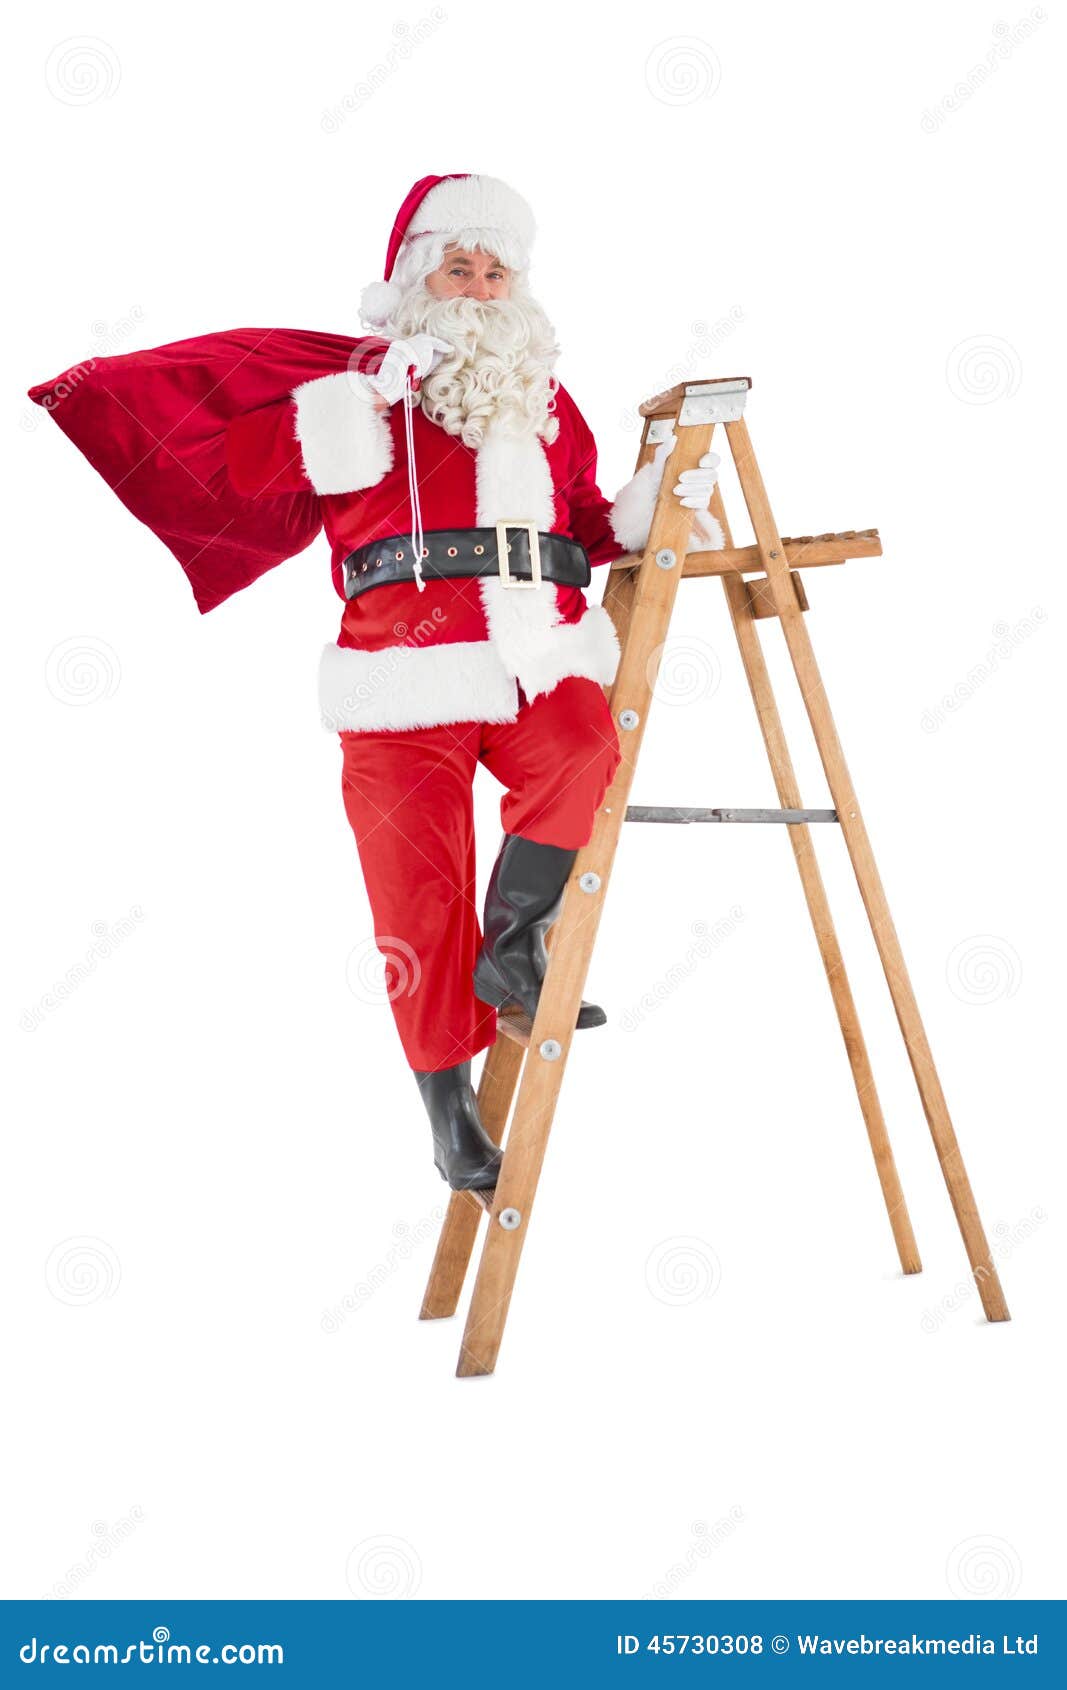 Santa Claus Climbing A Ladder Stock Photo - Image: 45730308